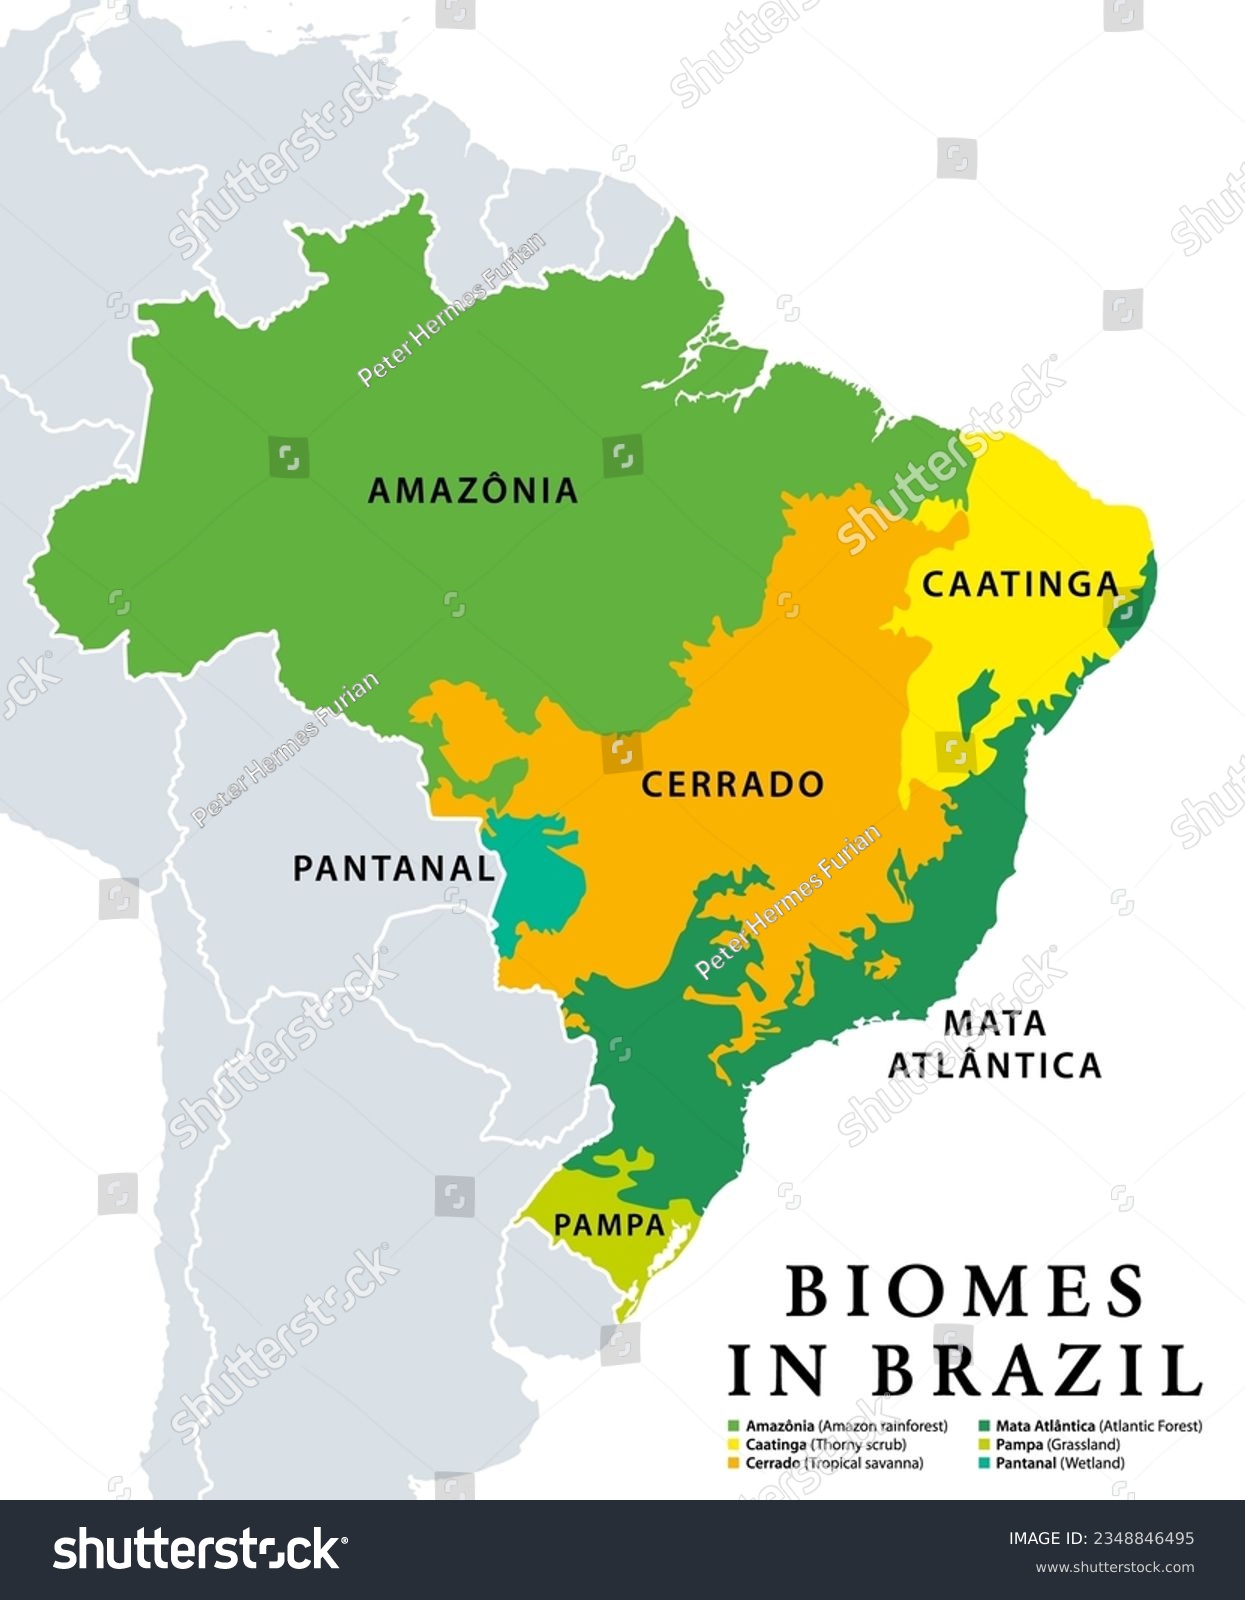 SVG of Biomes in Brazil, map of 6 ecosystems with natural vegetation. Amazonia (rainforest), Caatinga (scrub), Cerrado (savanna), Mata Atlantica (Atlantic Forest), Pampa (grassland), and Pantanal (wetland). svg